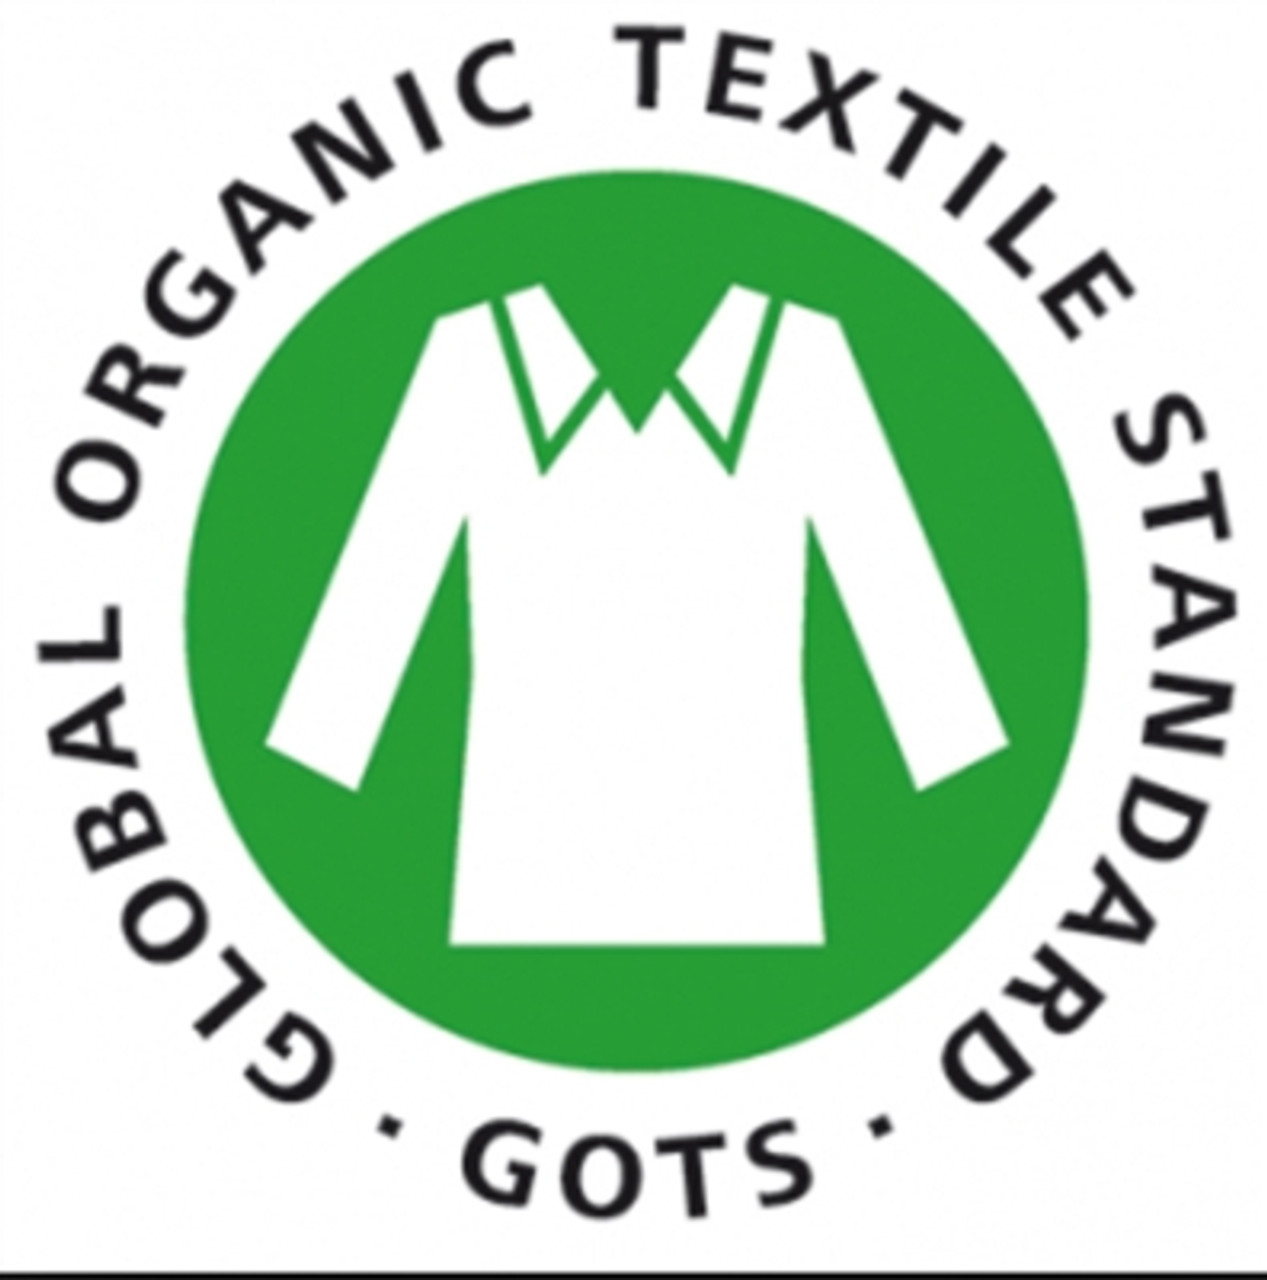 organic fitted sheet oeko tex jersey